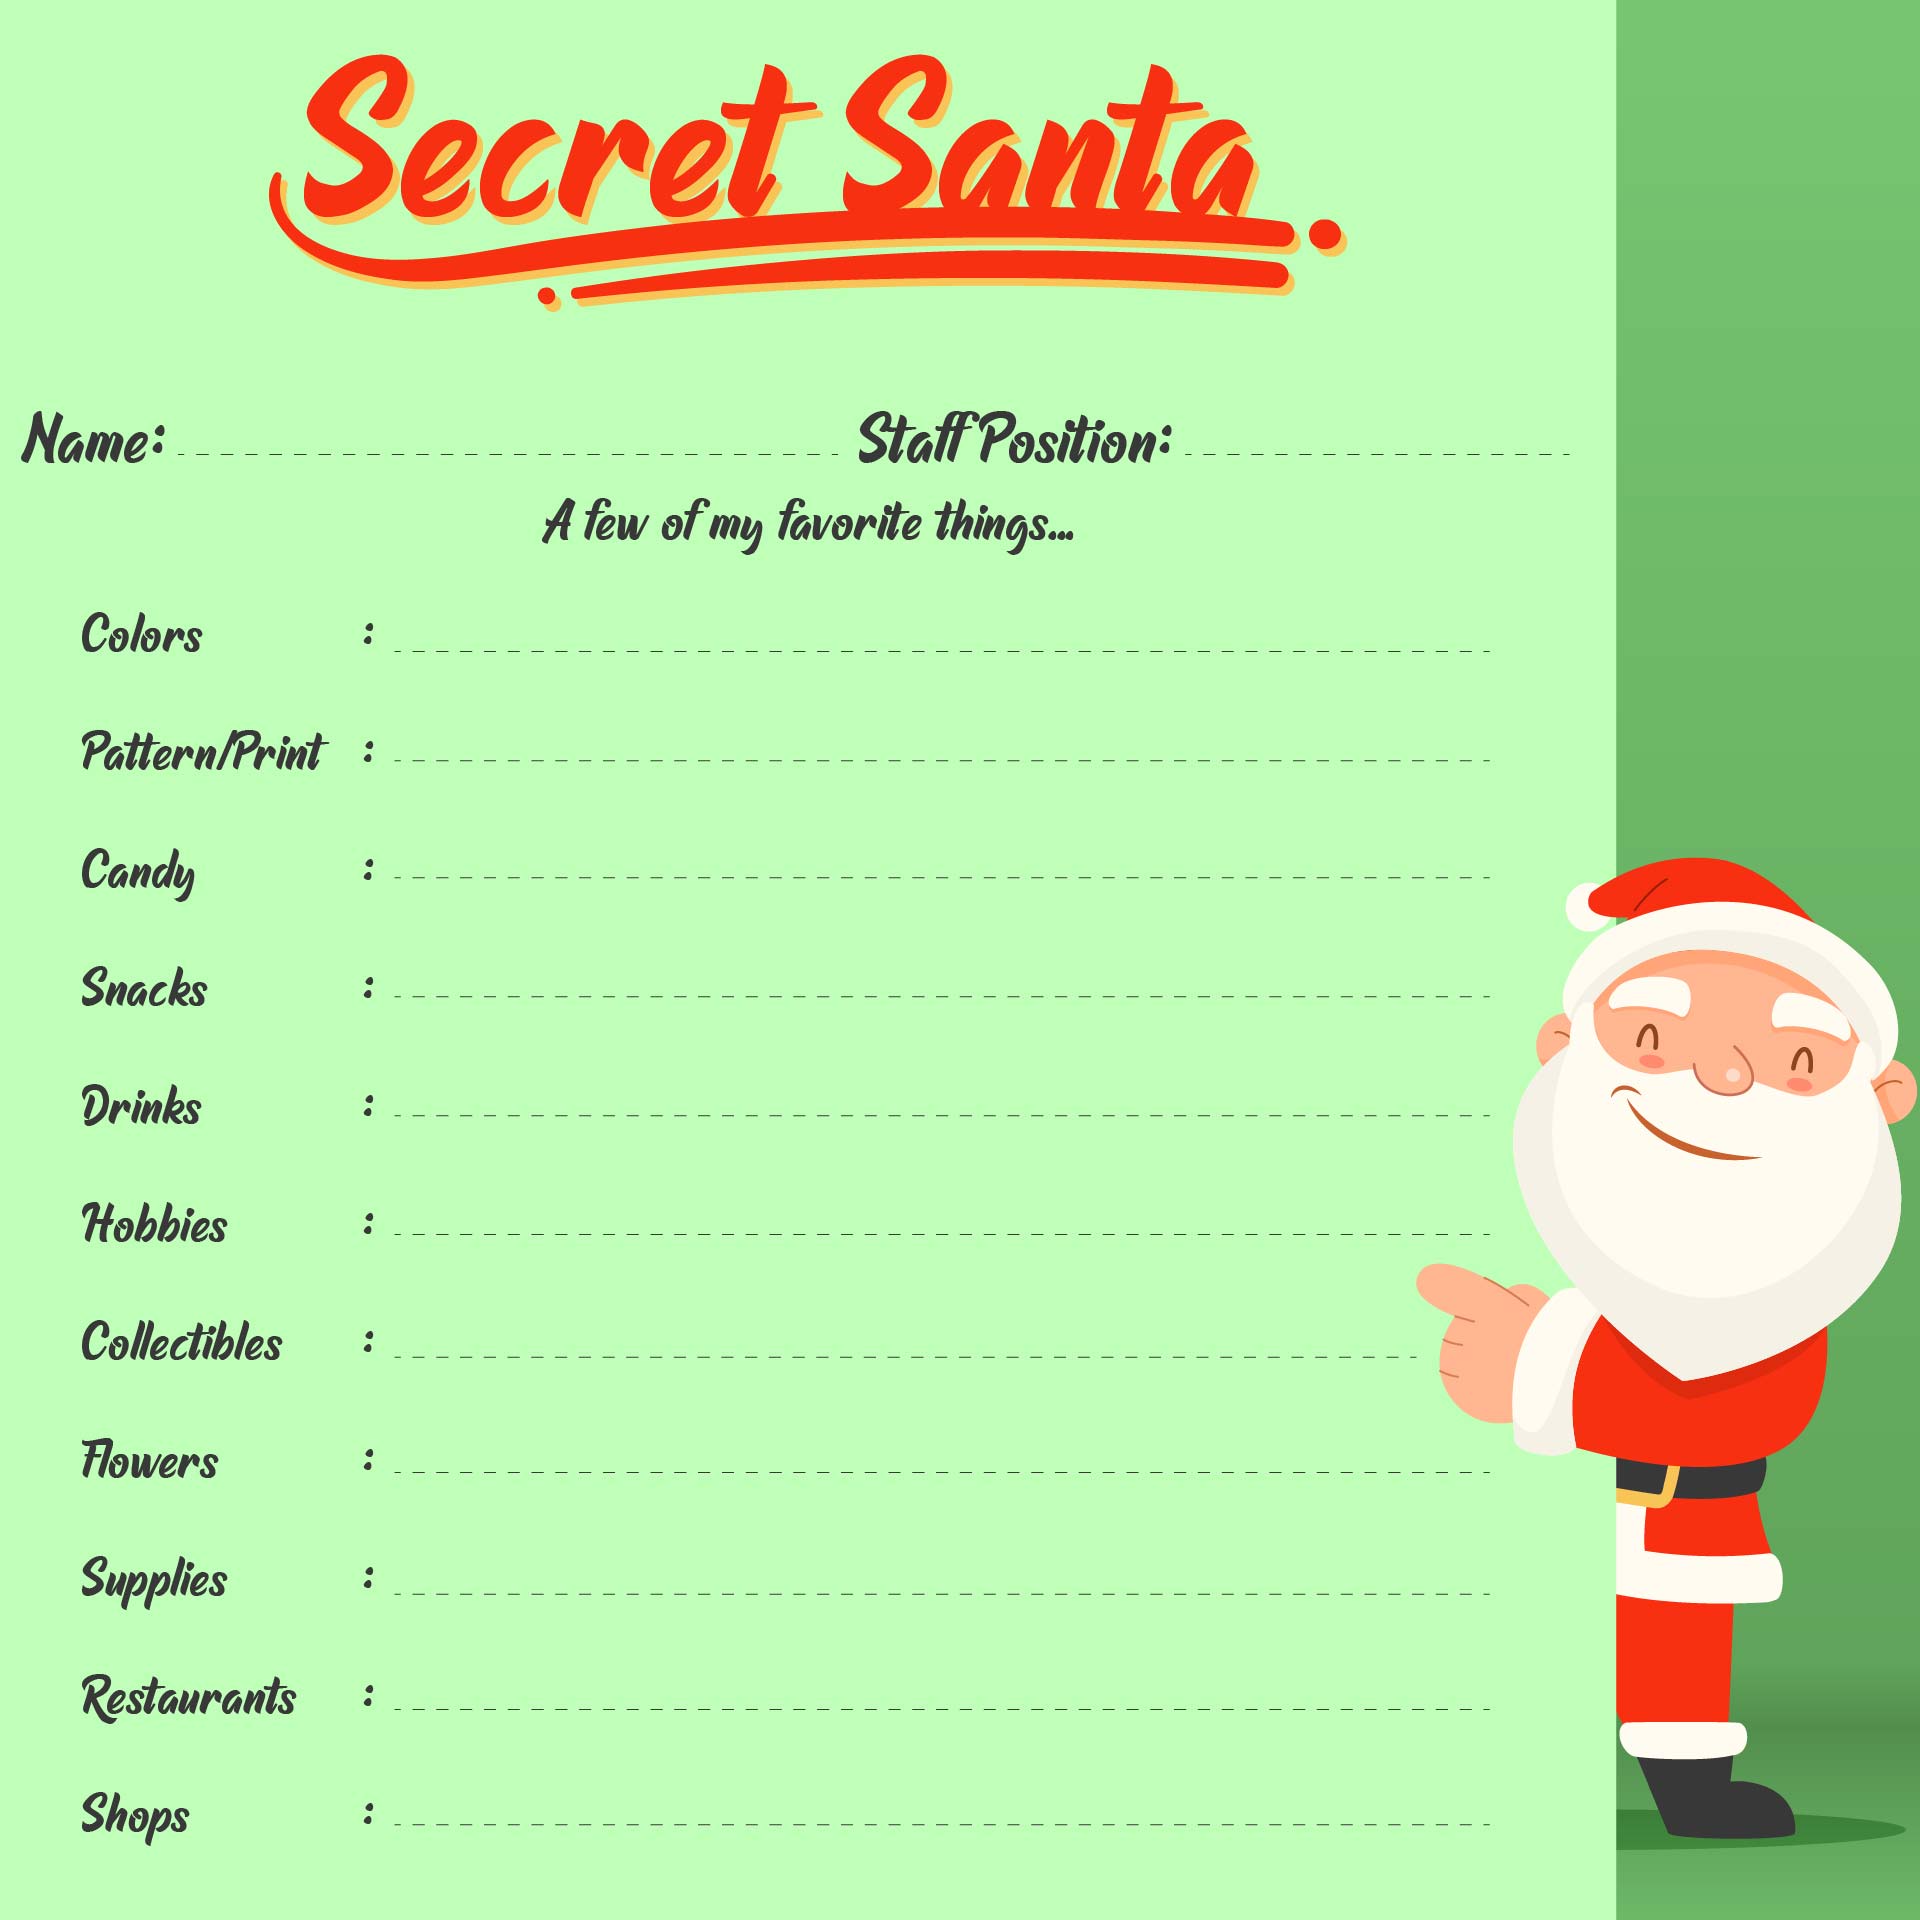 Secret Santa For Teachers And Staff Secret Santa Work Secret Santa Hot Sex Picture